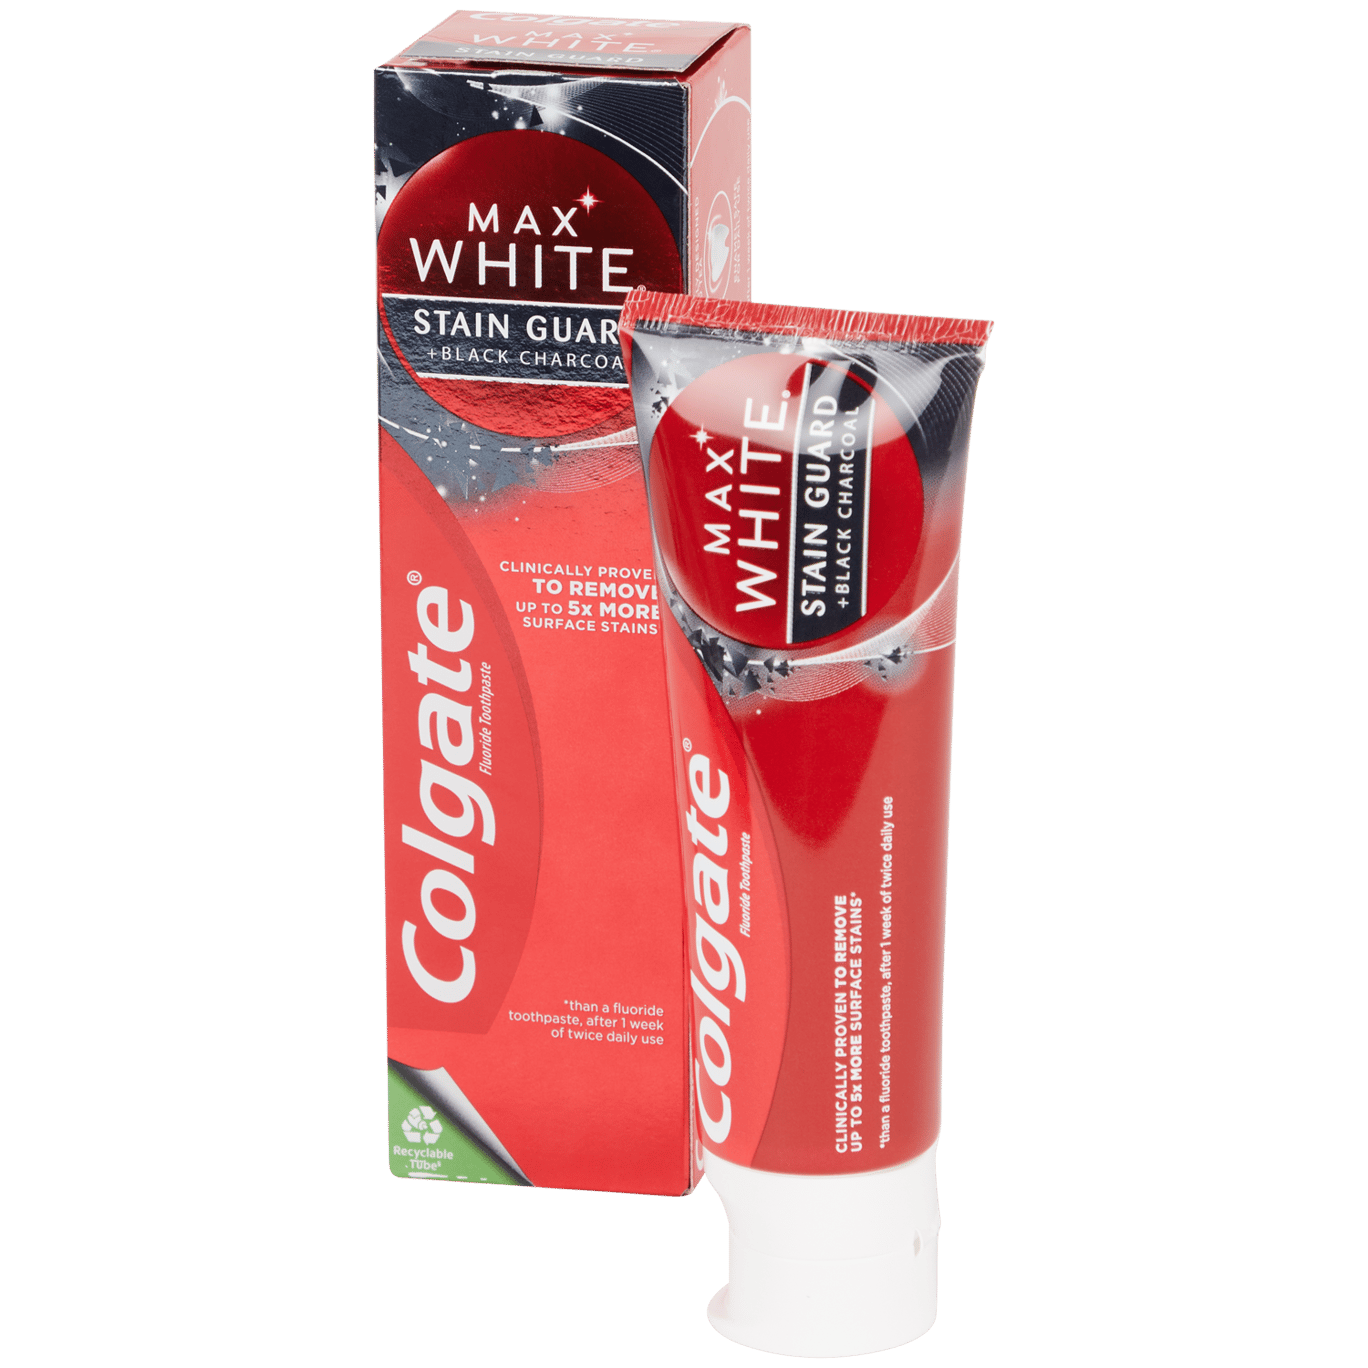 Pasta de dientes Colgate Max White Stain Guard